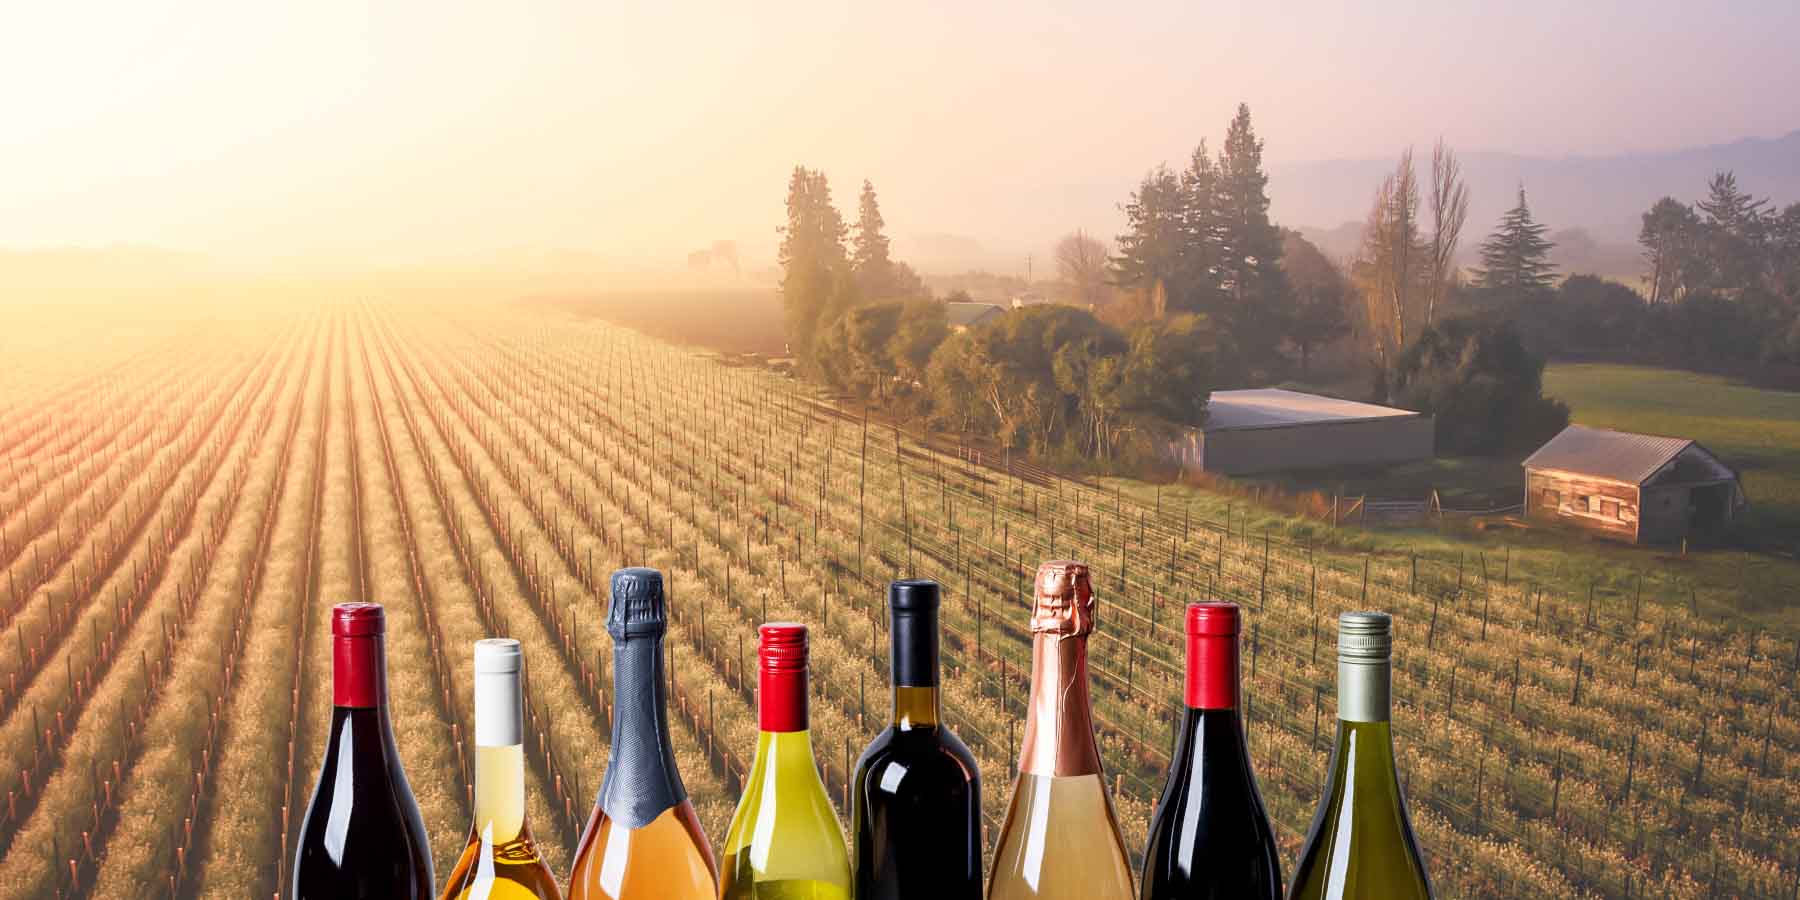 Sonoma and wine bottles